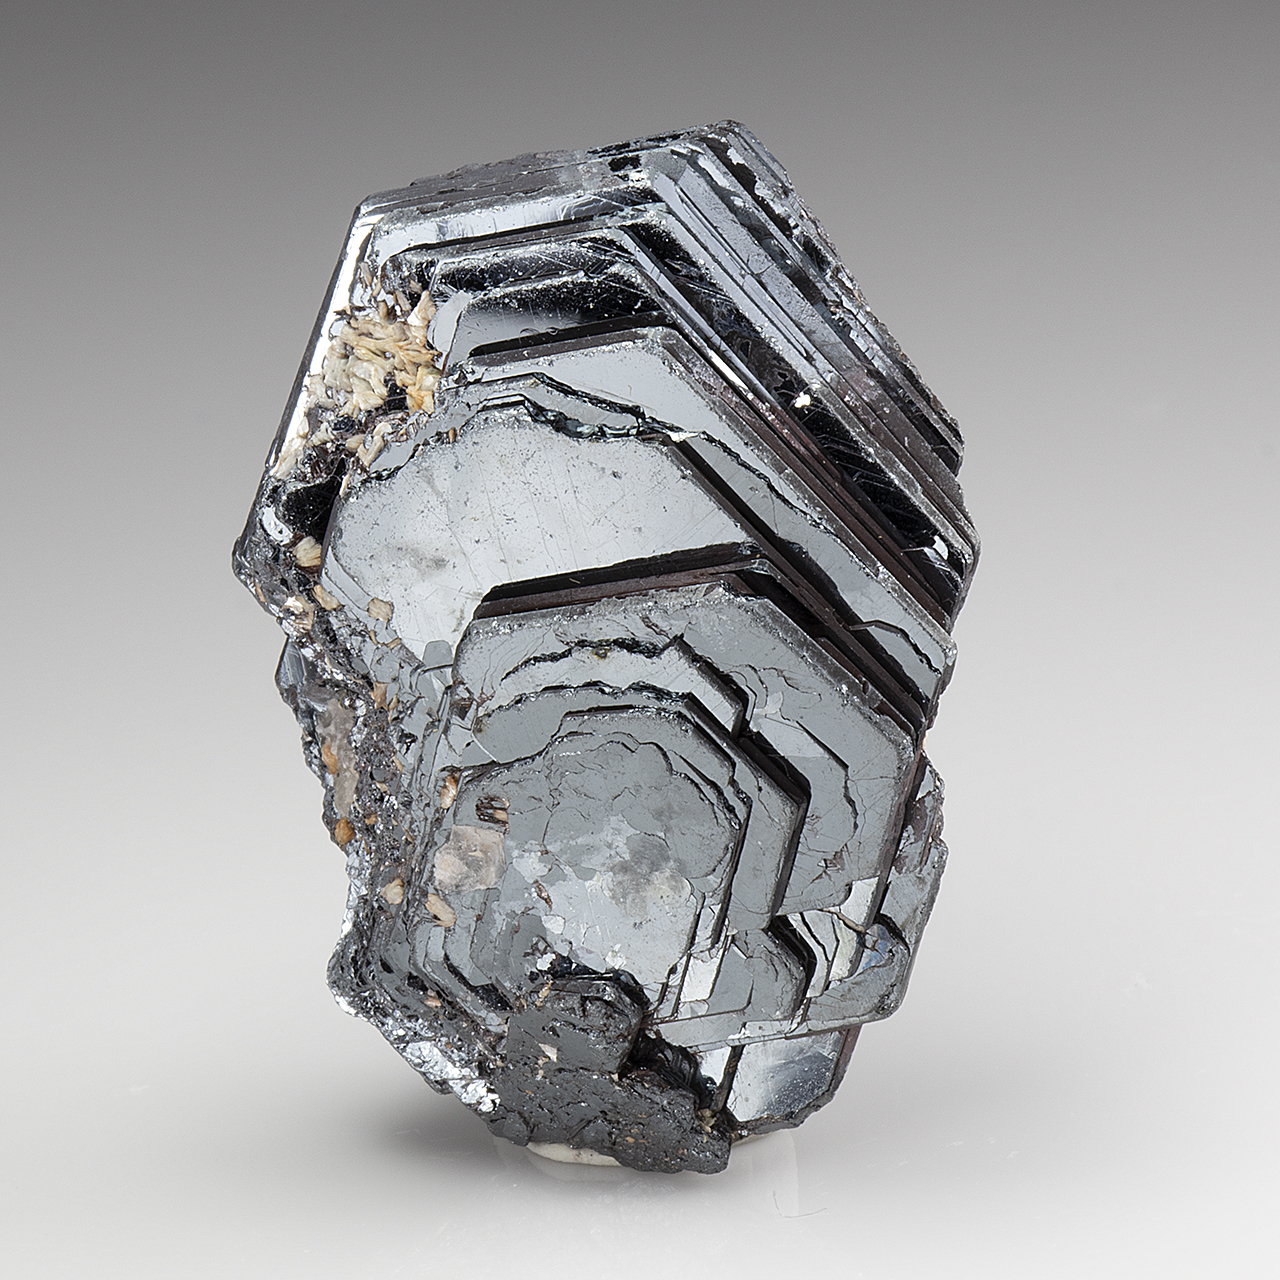 metallic dendrite crystal